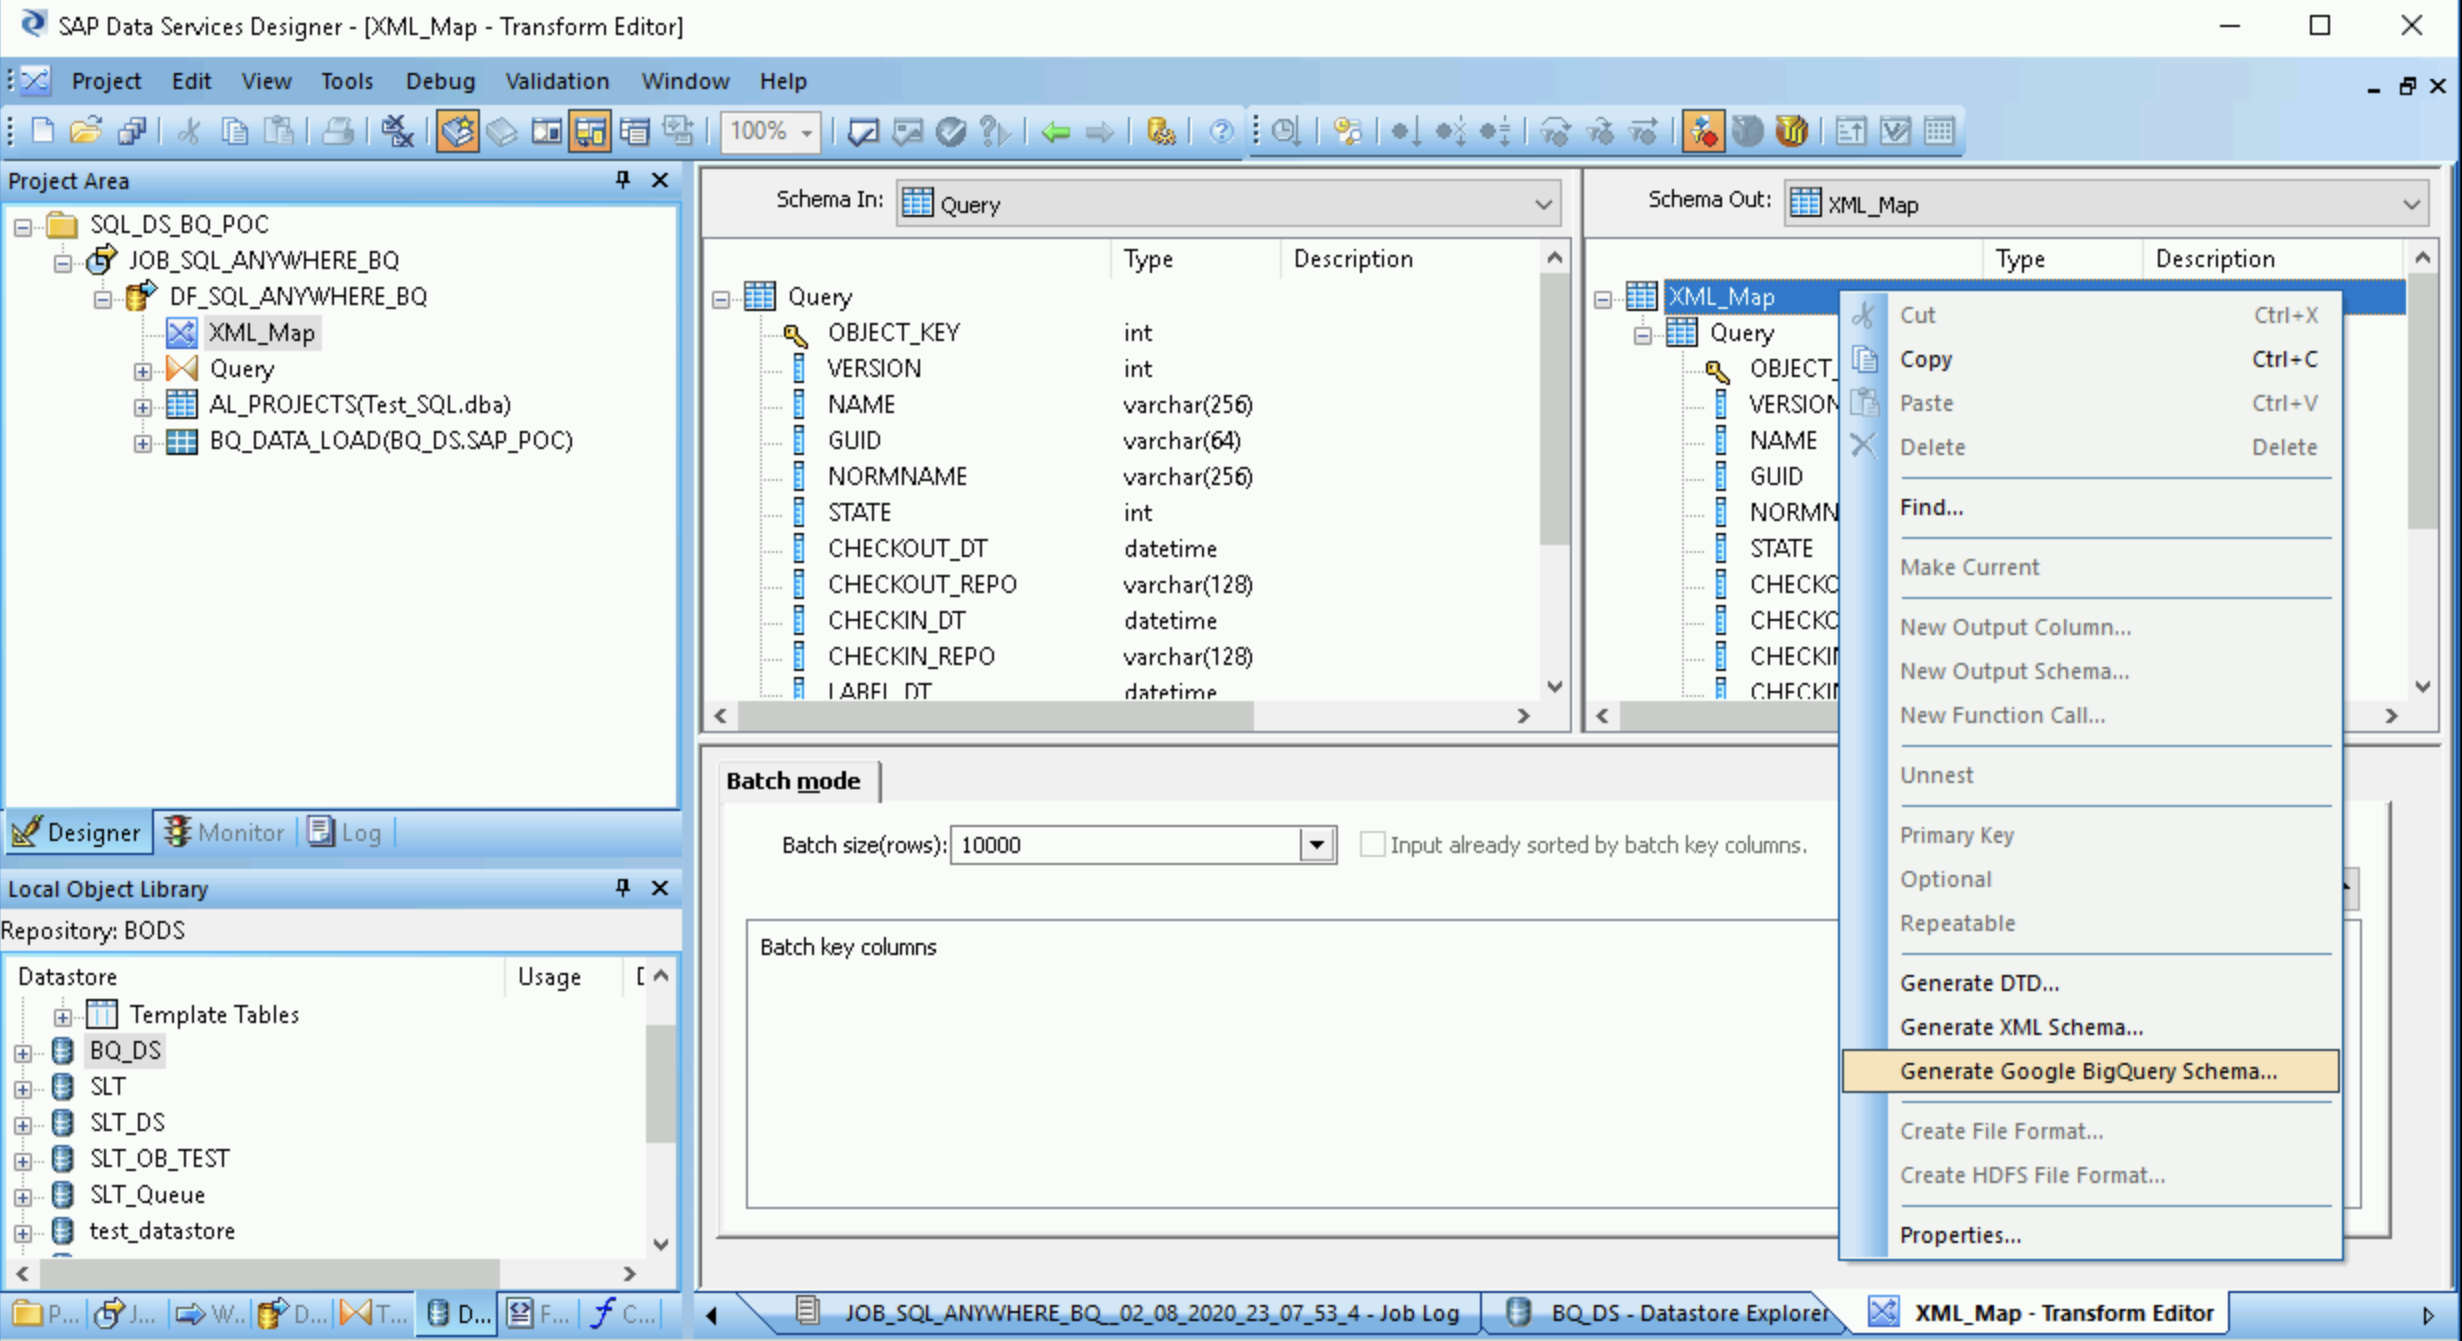 Uno screenshot di SAP Data Services Designer che mostra il menu a discesa per generare uno schema di Google BigQuery.